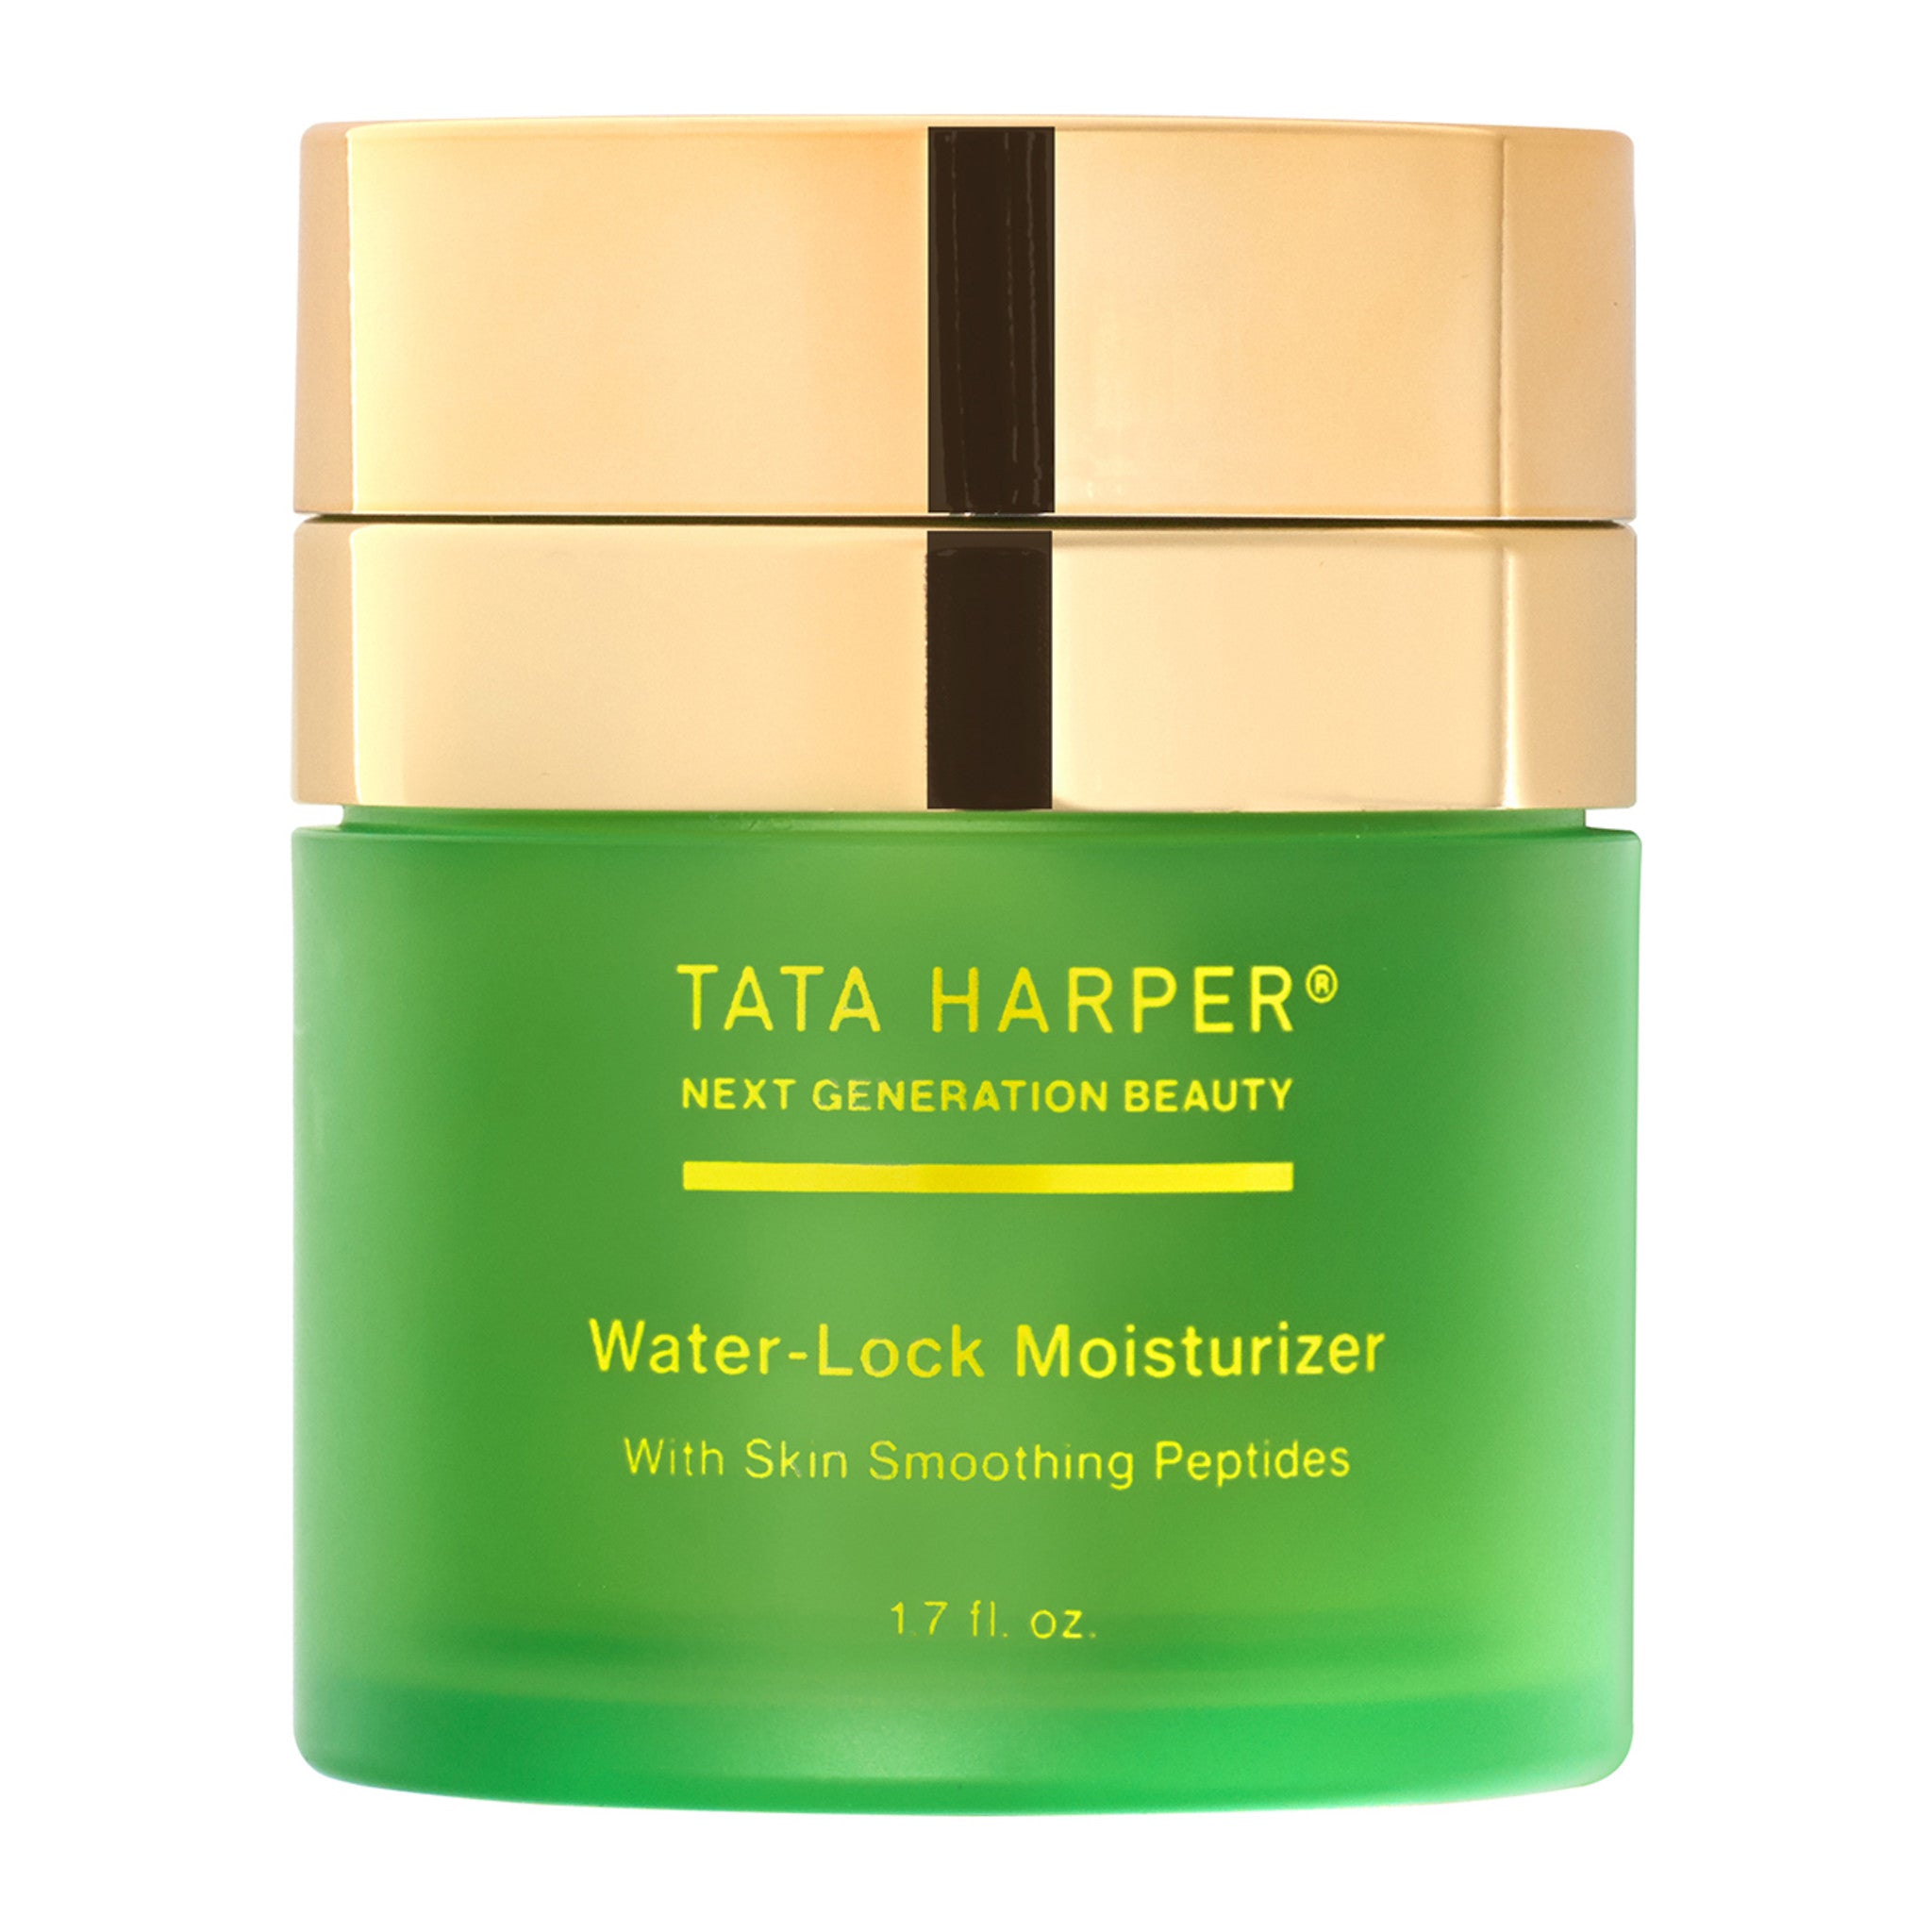 Tata Harper Water-Lock Moisturizer main image.